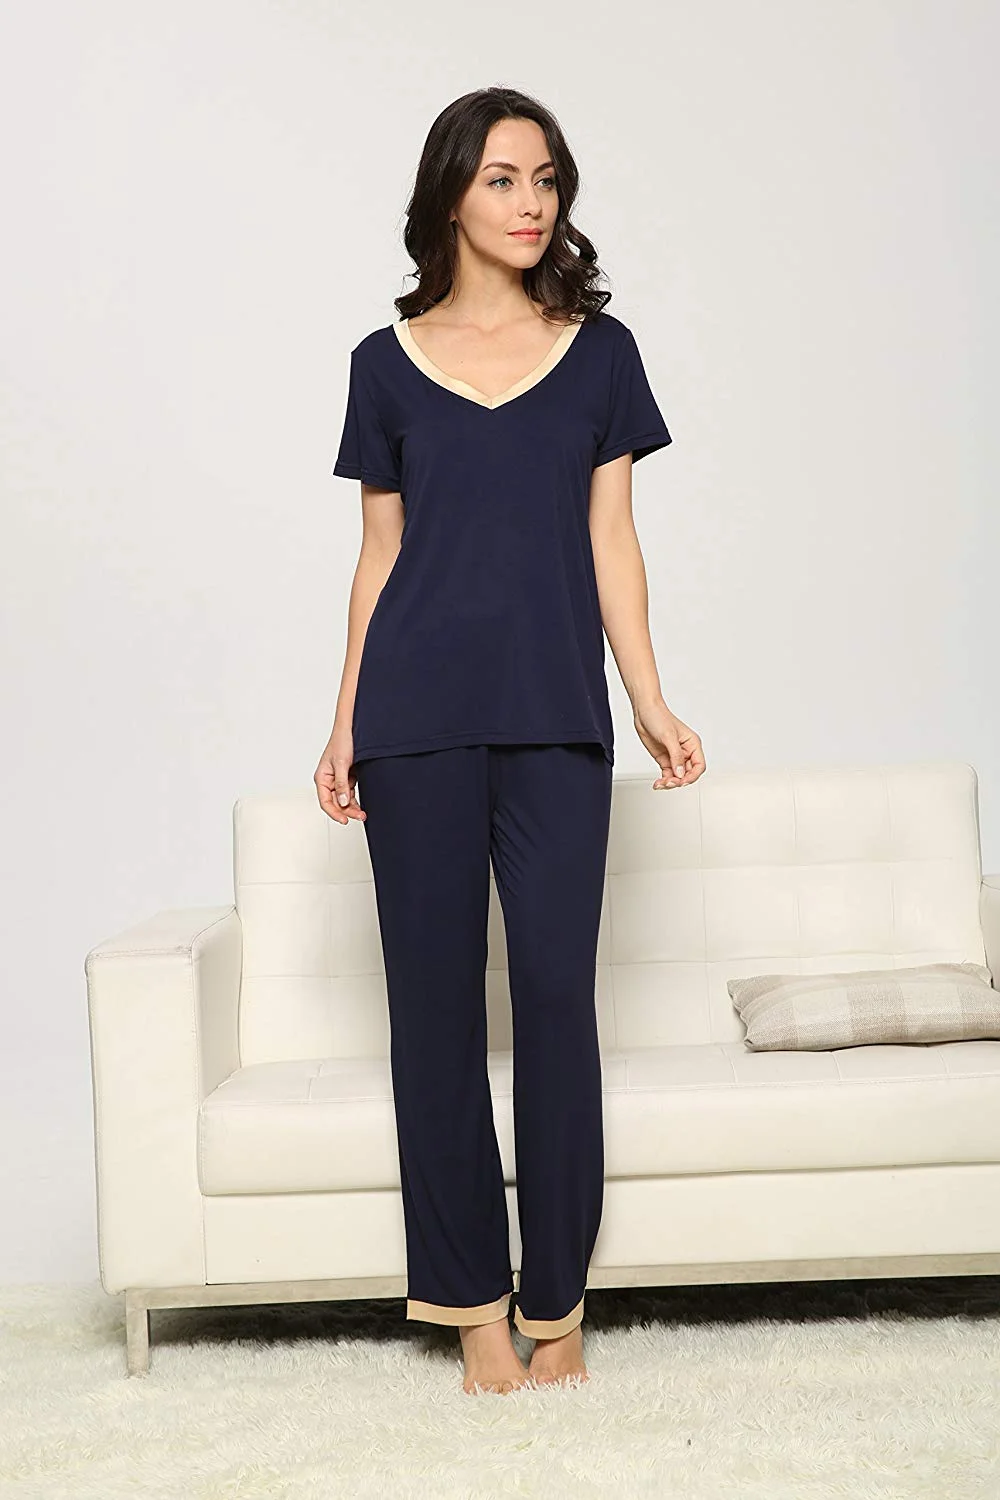 Women's V-Neck Sleepwear Short Sleeves Top with Pants Pajama Set